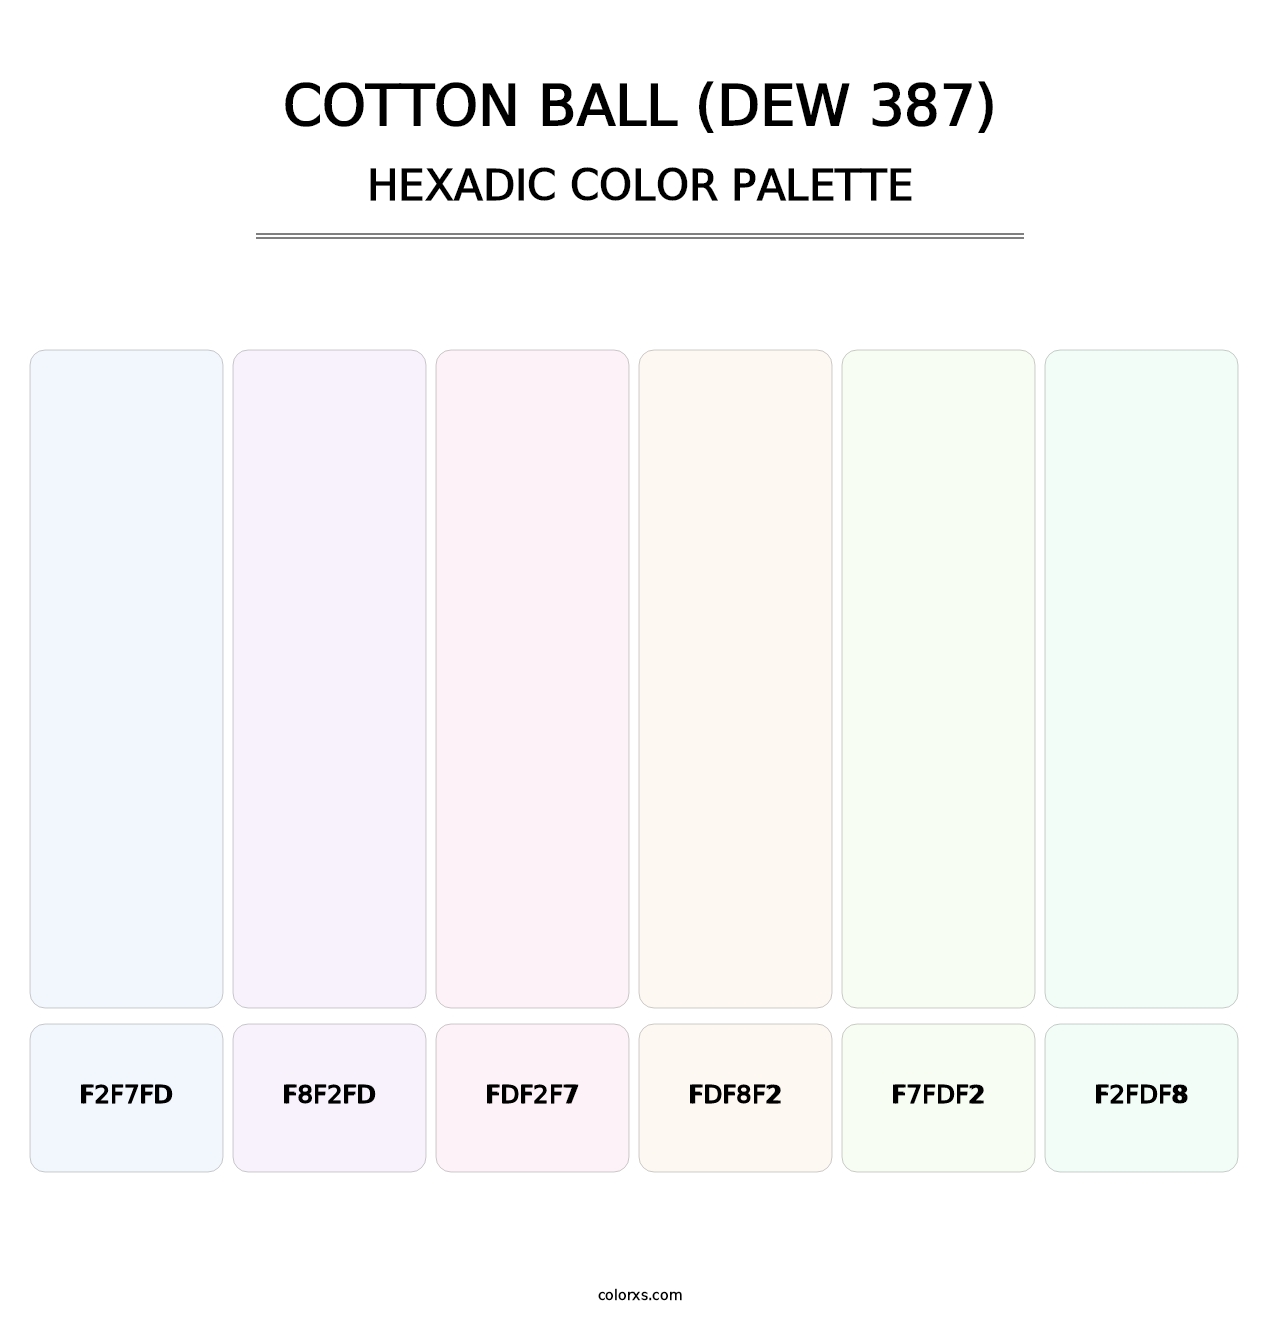 Cotton Ball (DEW 387) - Hexadic Color Palette